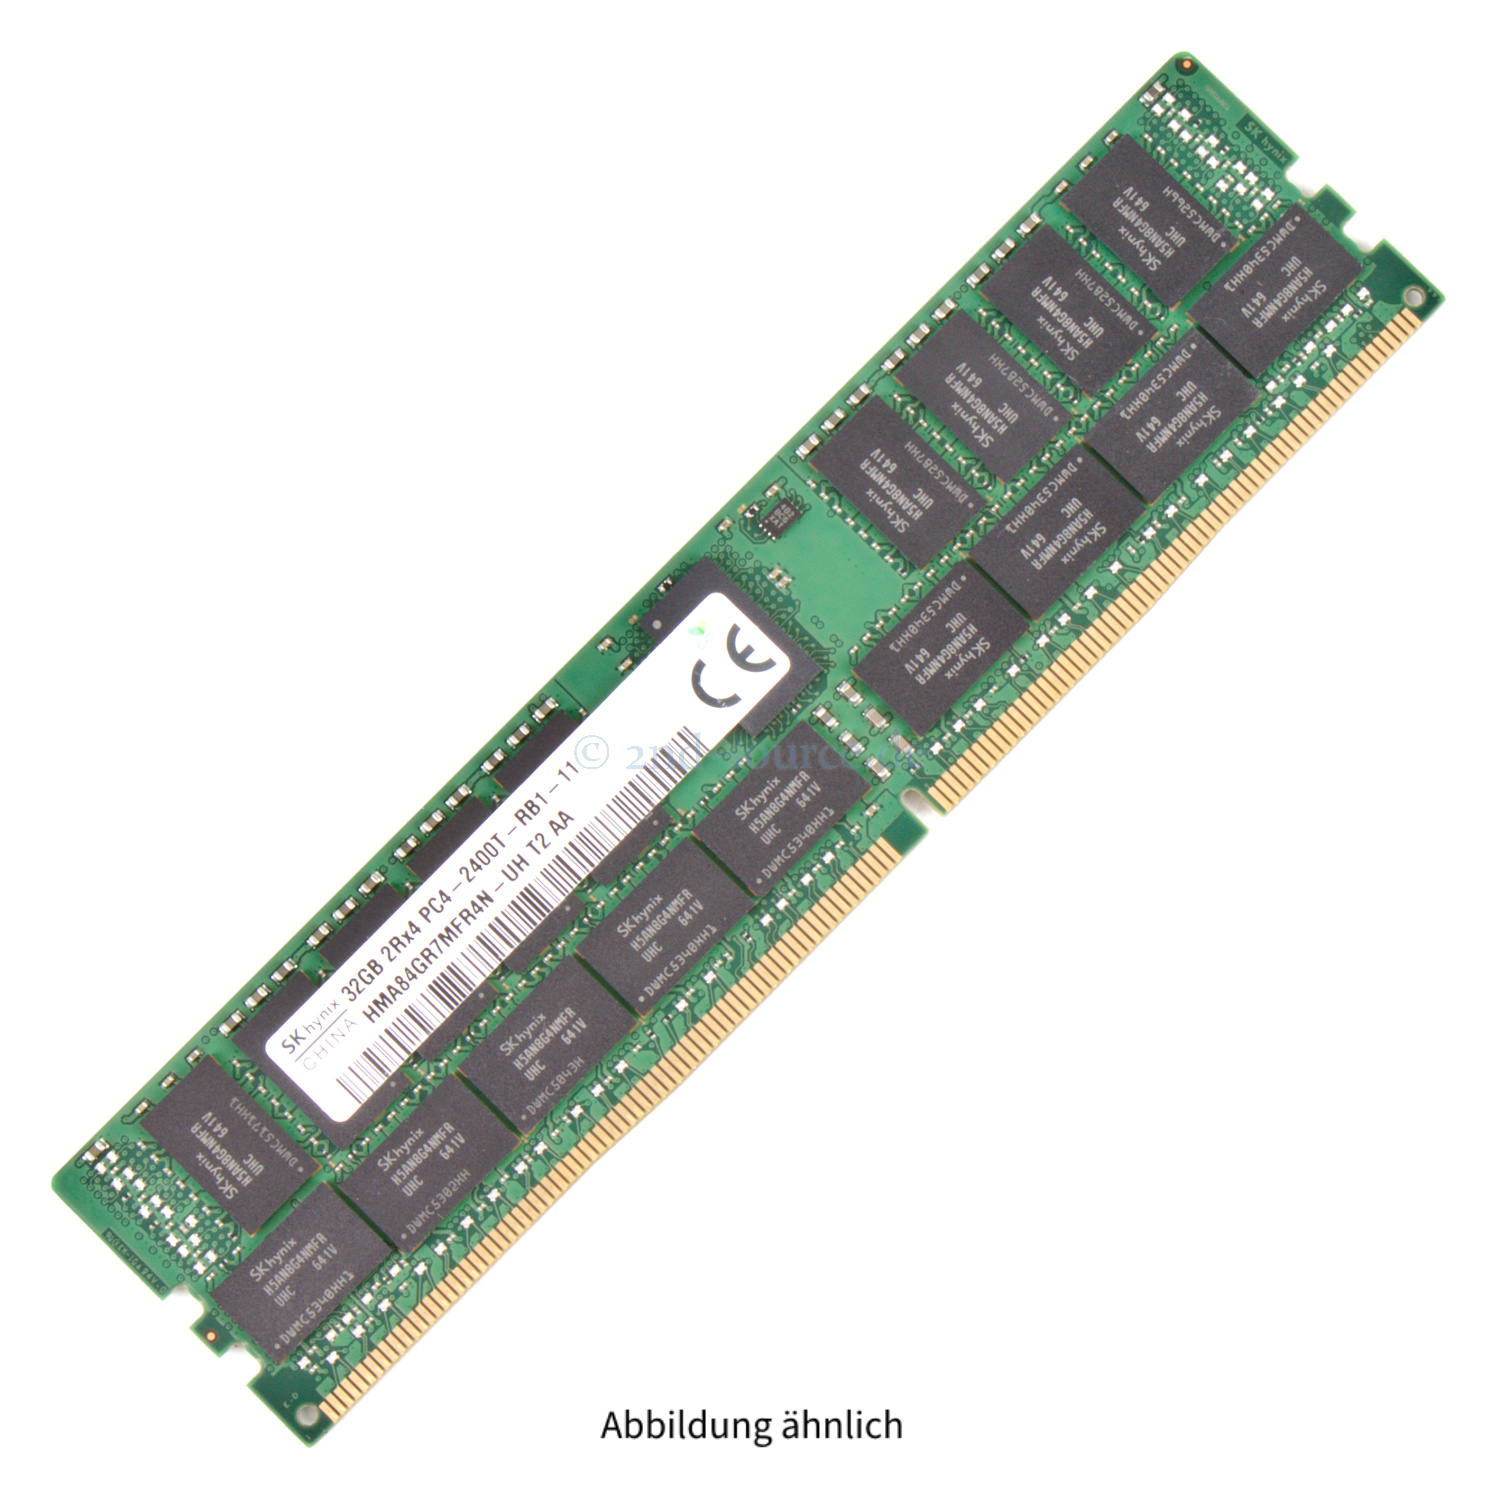 Hynix 32GB PC4-19200T-R DIMM Dual Rank x4 (DDR4-2400) Registered ECC HMA84GR7MFR4N-UH